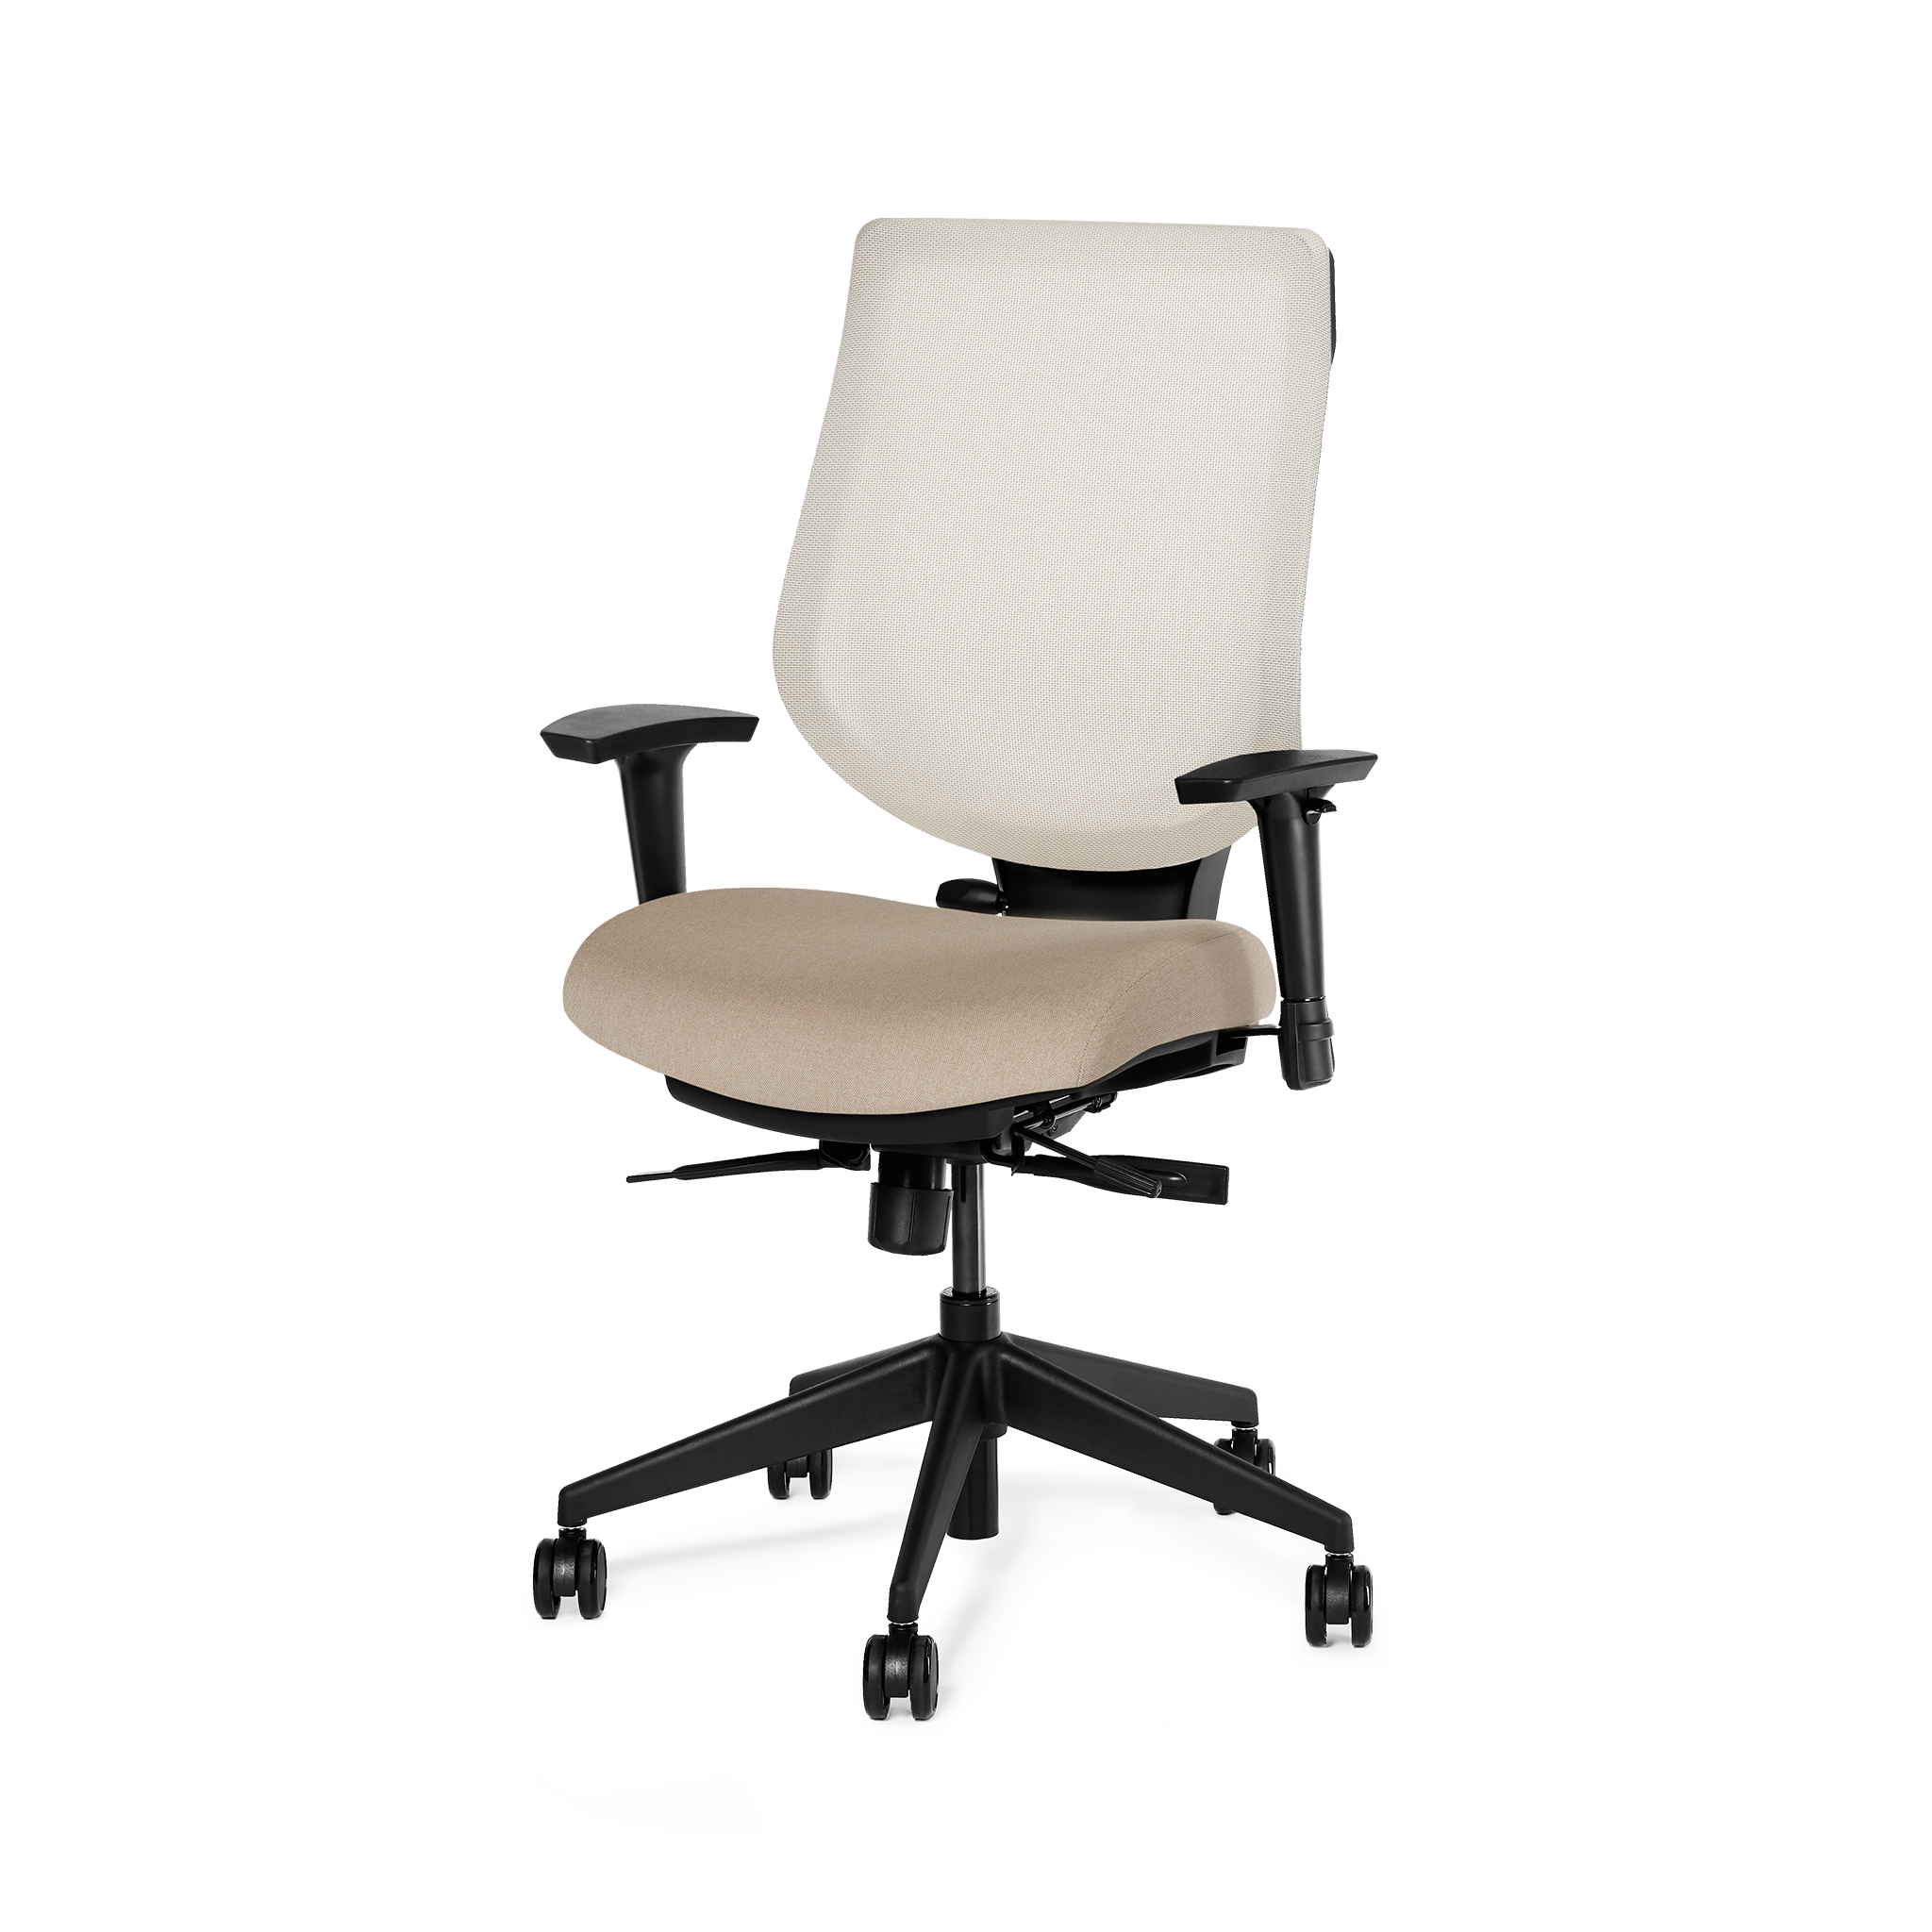 YouToo Ergonomic Chair - Black-Cream – Sand - Noir-Cream – Sand